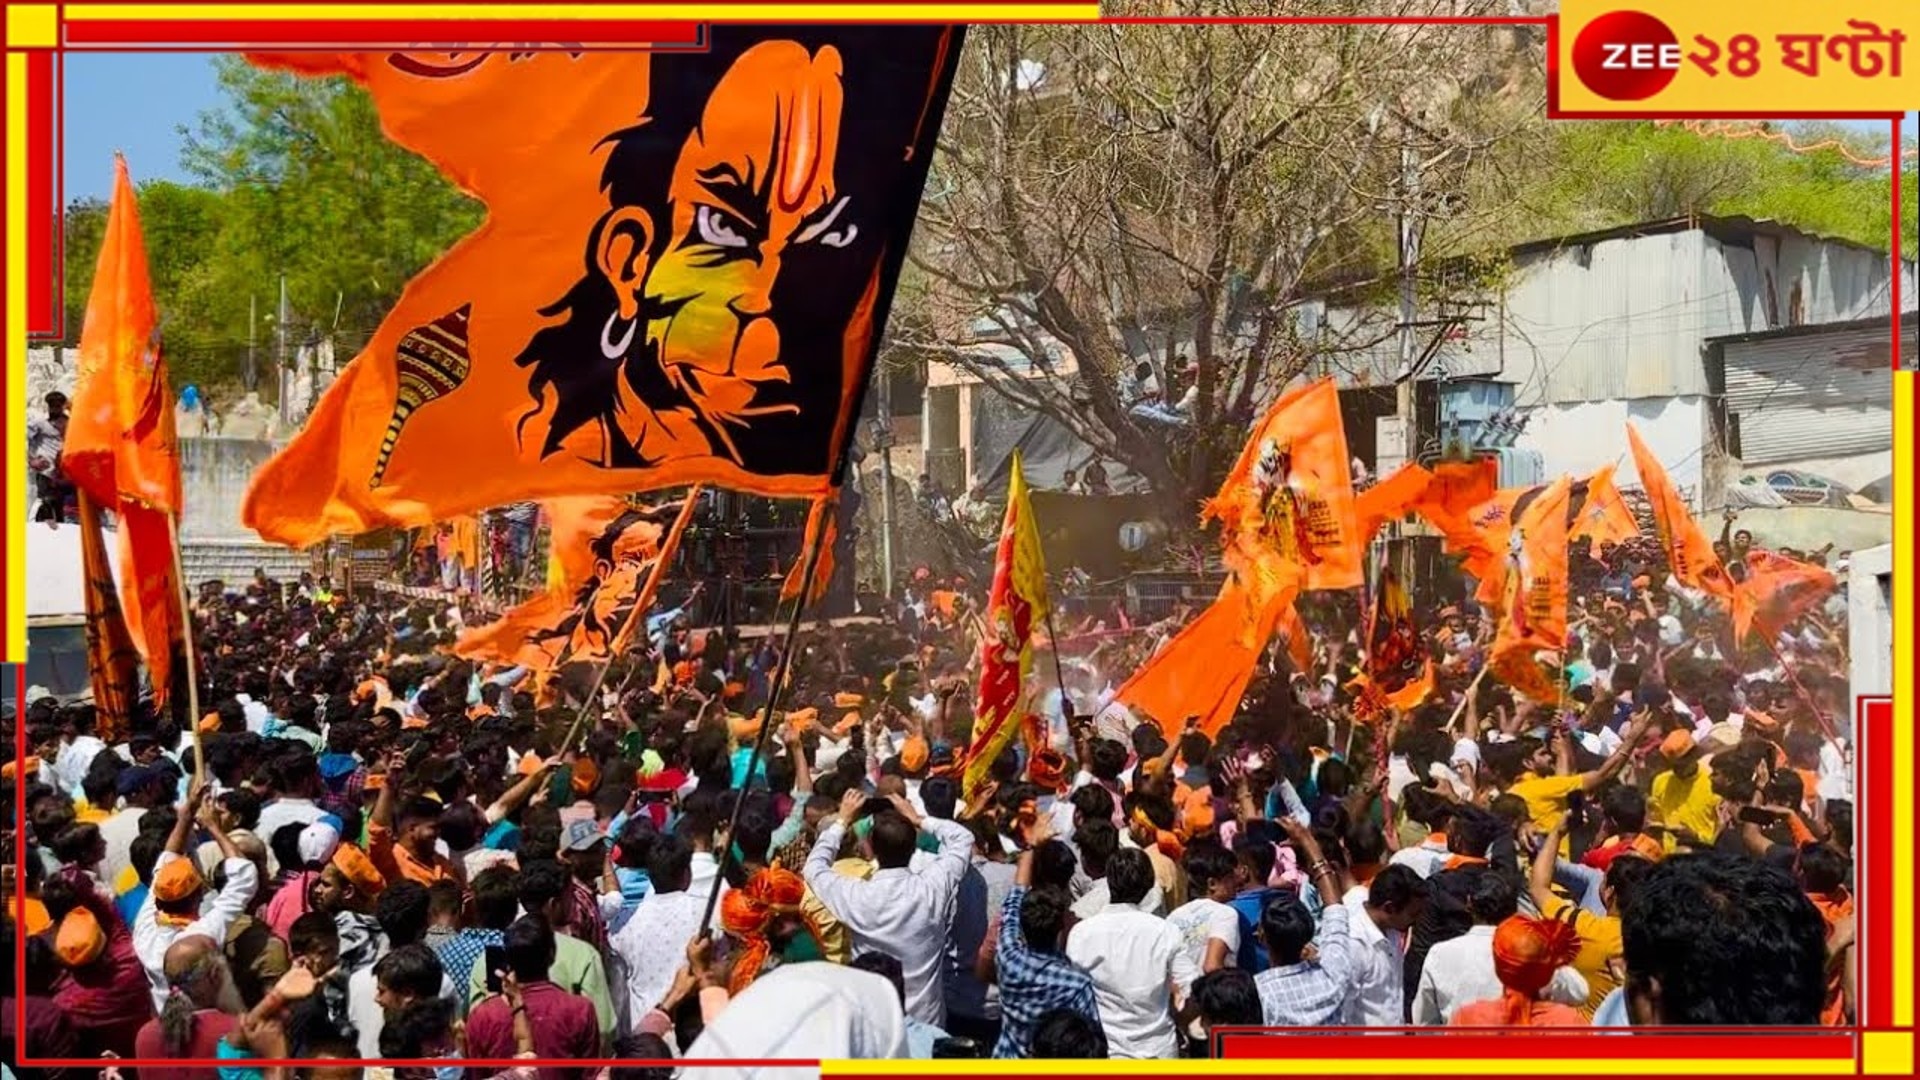 Ram Navami Rally: ভোটের আগে রামনবমী বিতর্ক! অস্ত্র হাতে রামনবমীর মিছিল সিউড়িতে 